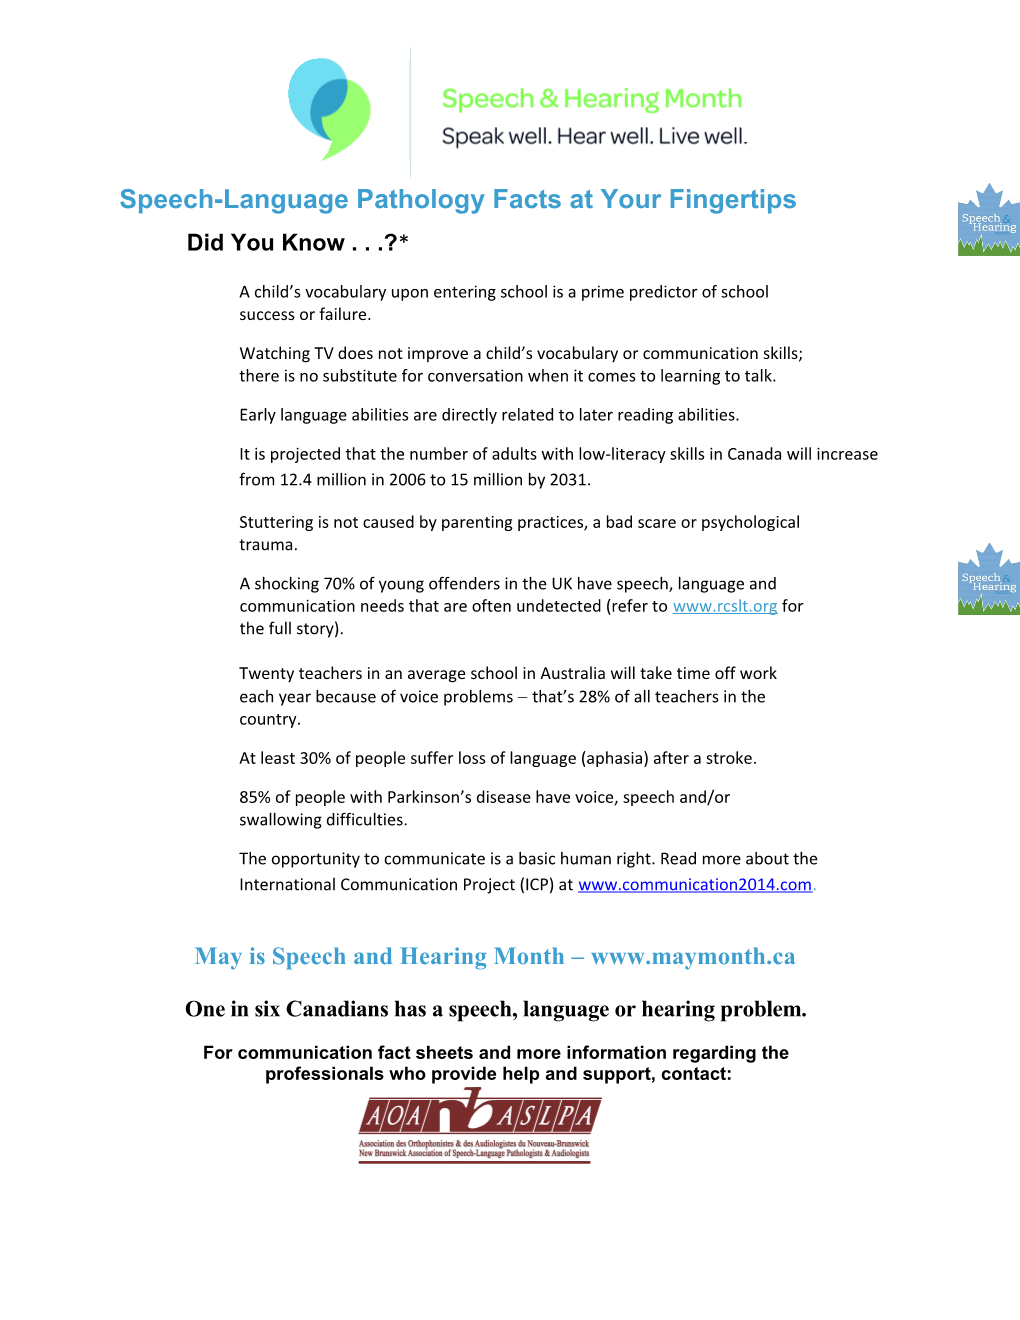 Speech-Language Pathology Facts at Your Fingertips